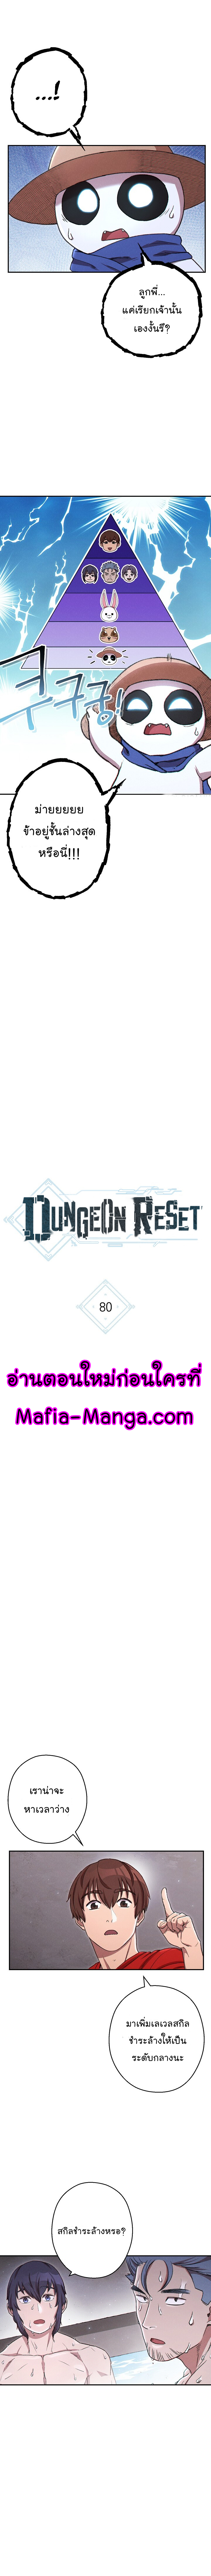 Dungeon Reset80 02